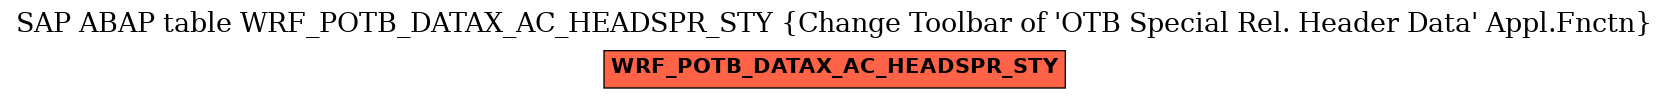 E-R Diagram for table WRF_POTB_DATAX_AC_HEADSPR_STY (Change Toolbar of 